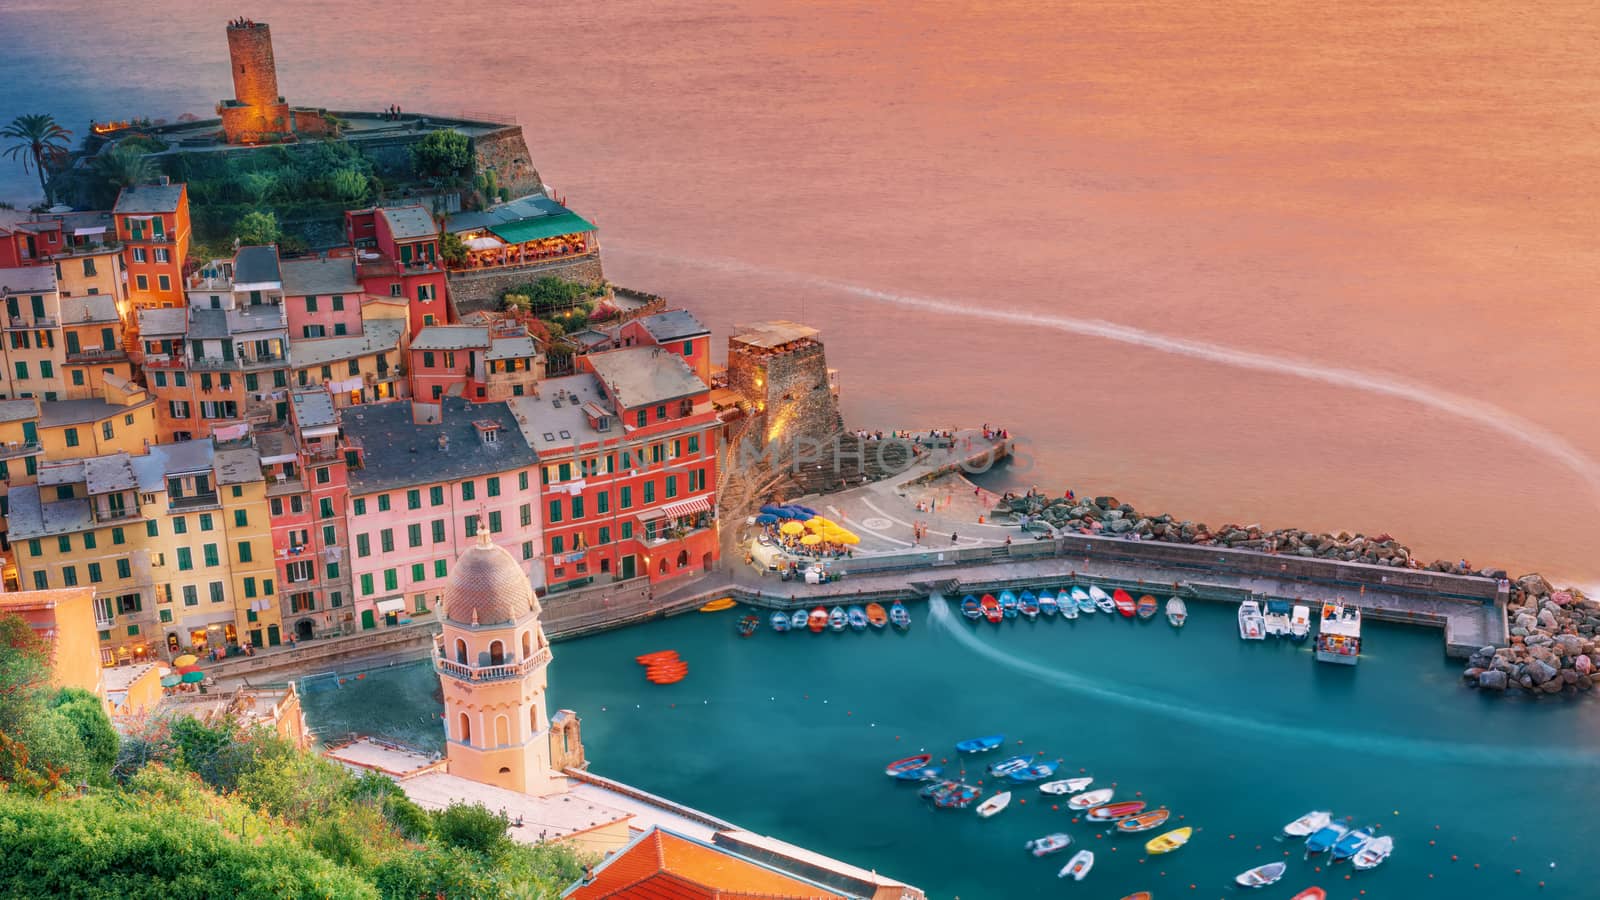 Vernazza colorful city on the seashore